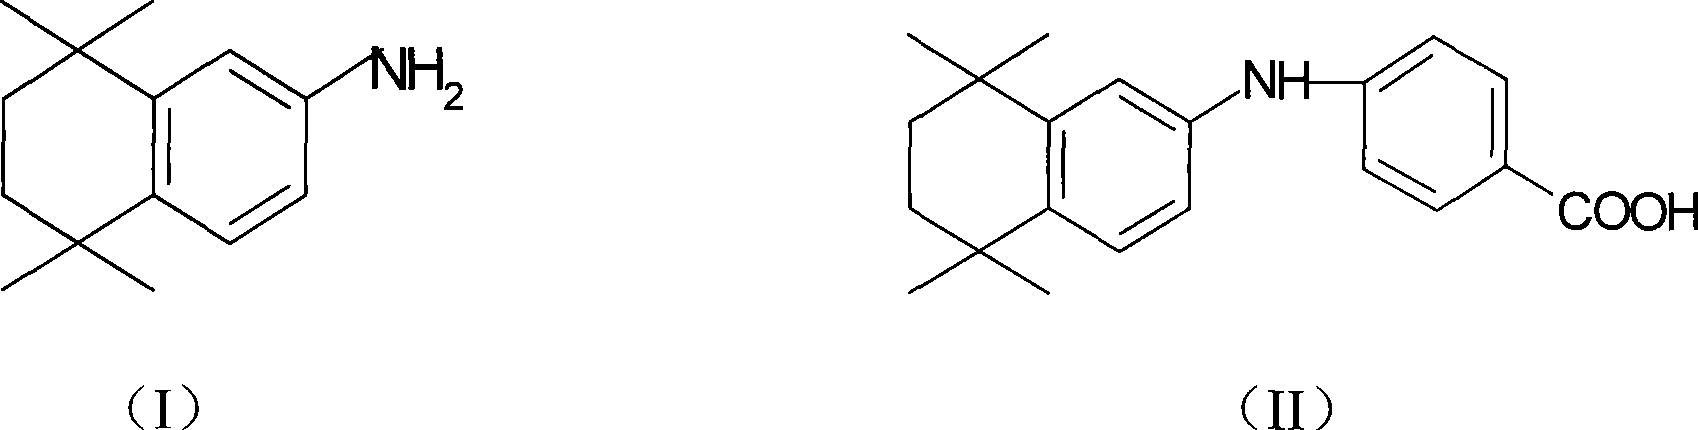 Method for synthesizing 5,6,7,8-tetrahydro-5,5,8,8-tetramethyl-2-naphthylamine